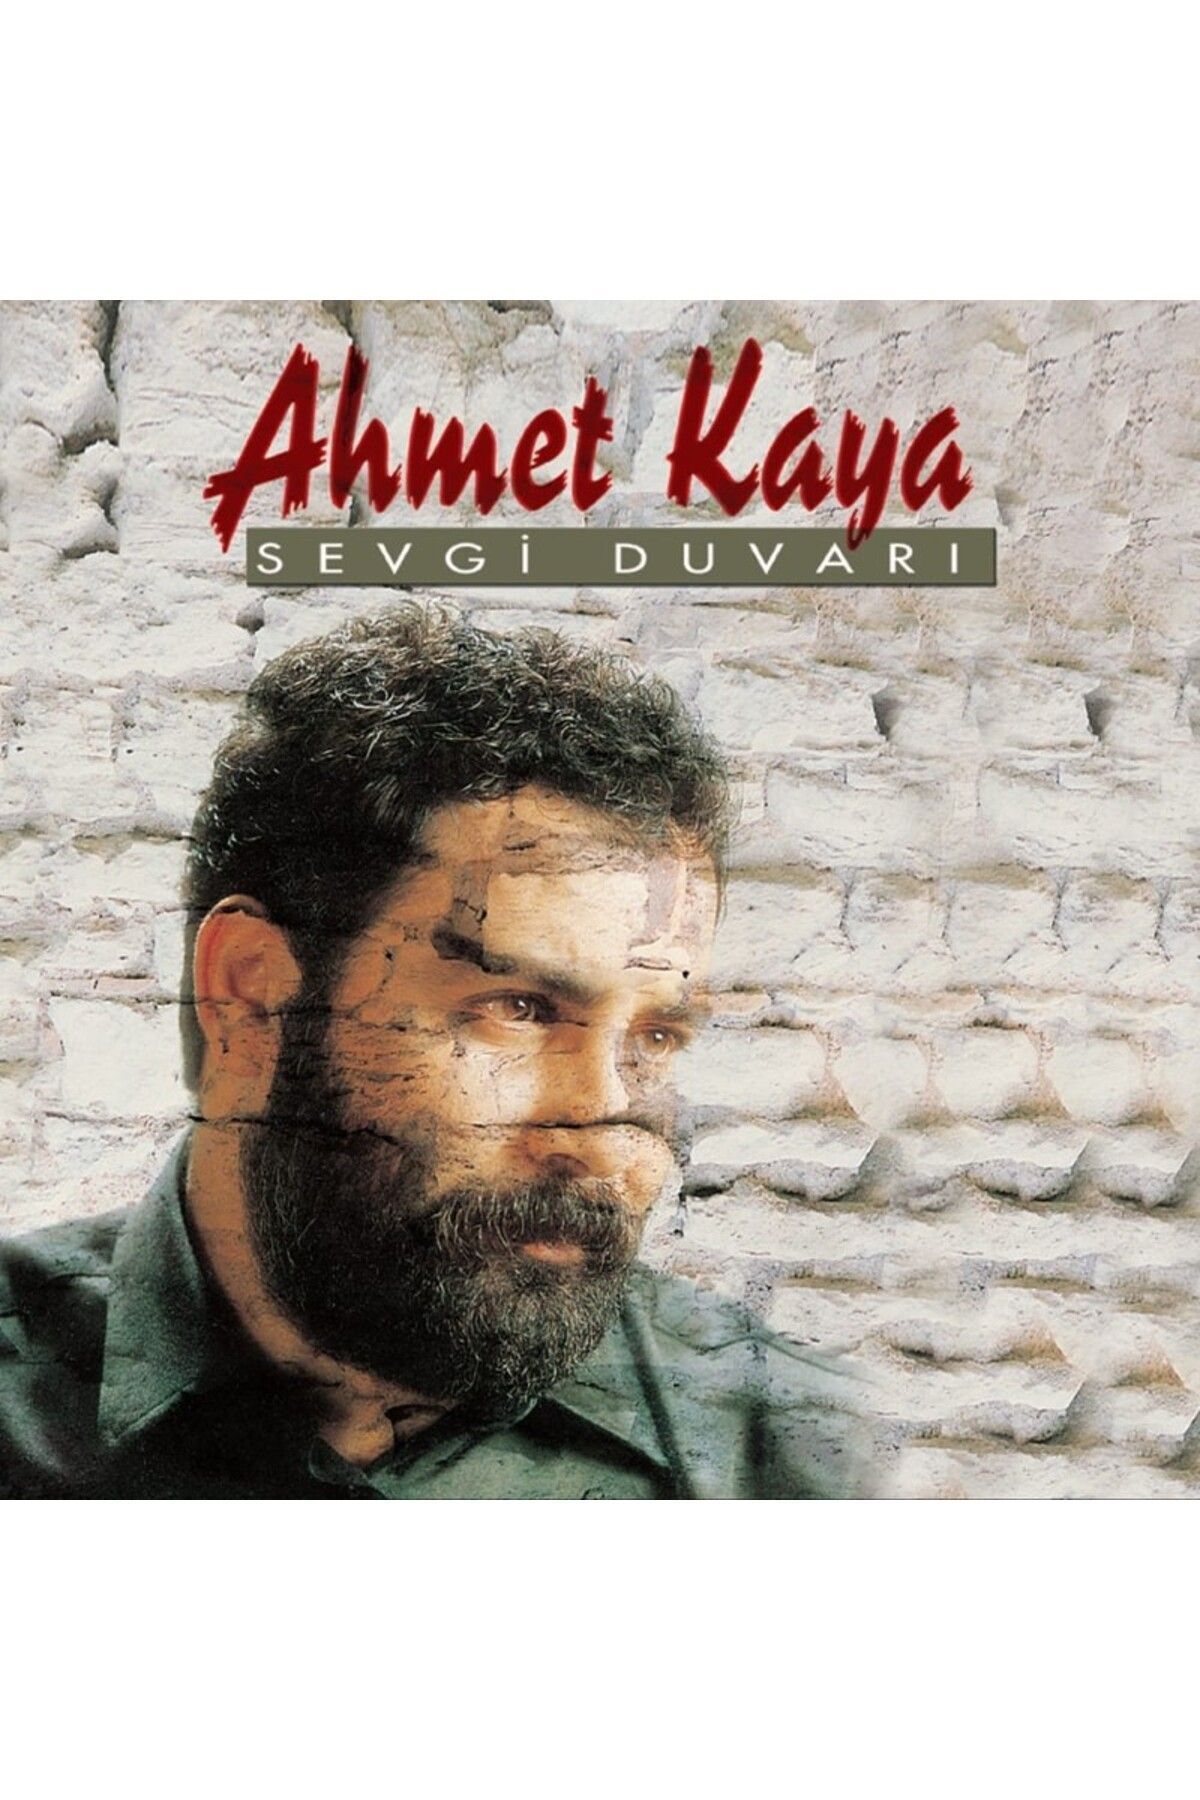 plakmarketi Ahmet Kaya Sevgi Duvarı Vinyl, Lp, Album, Plak